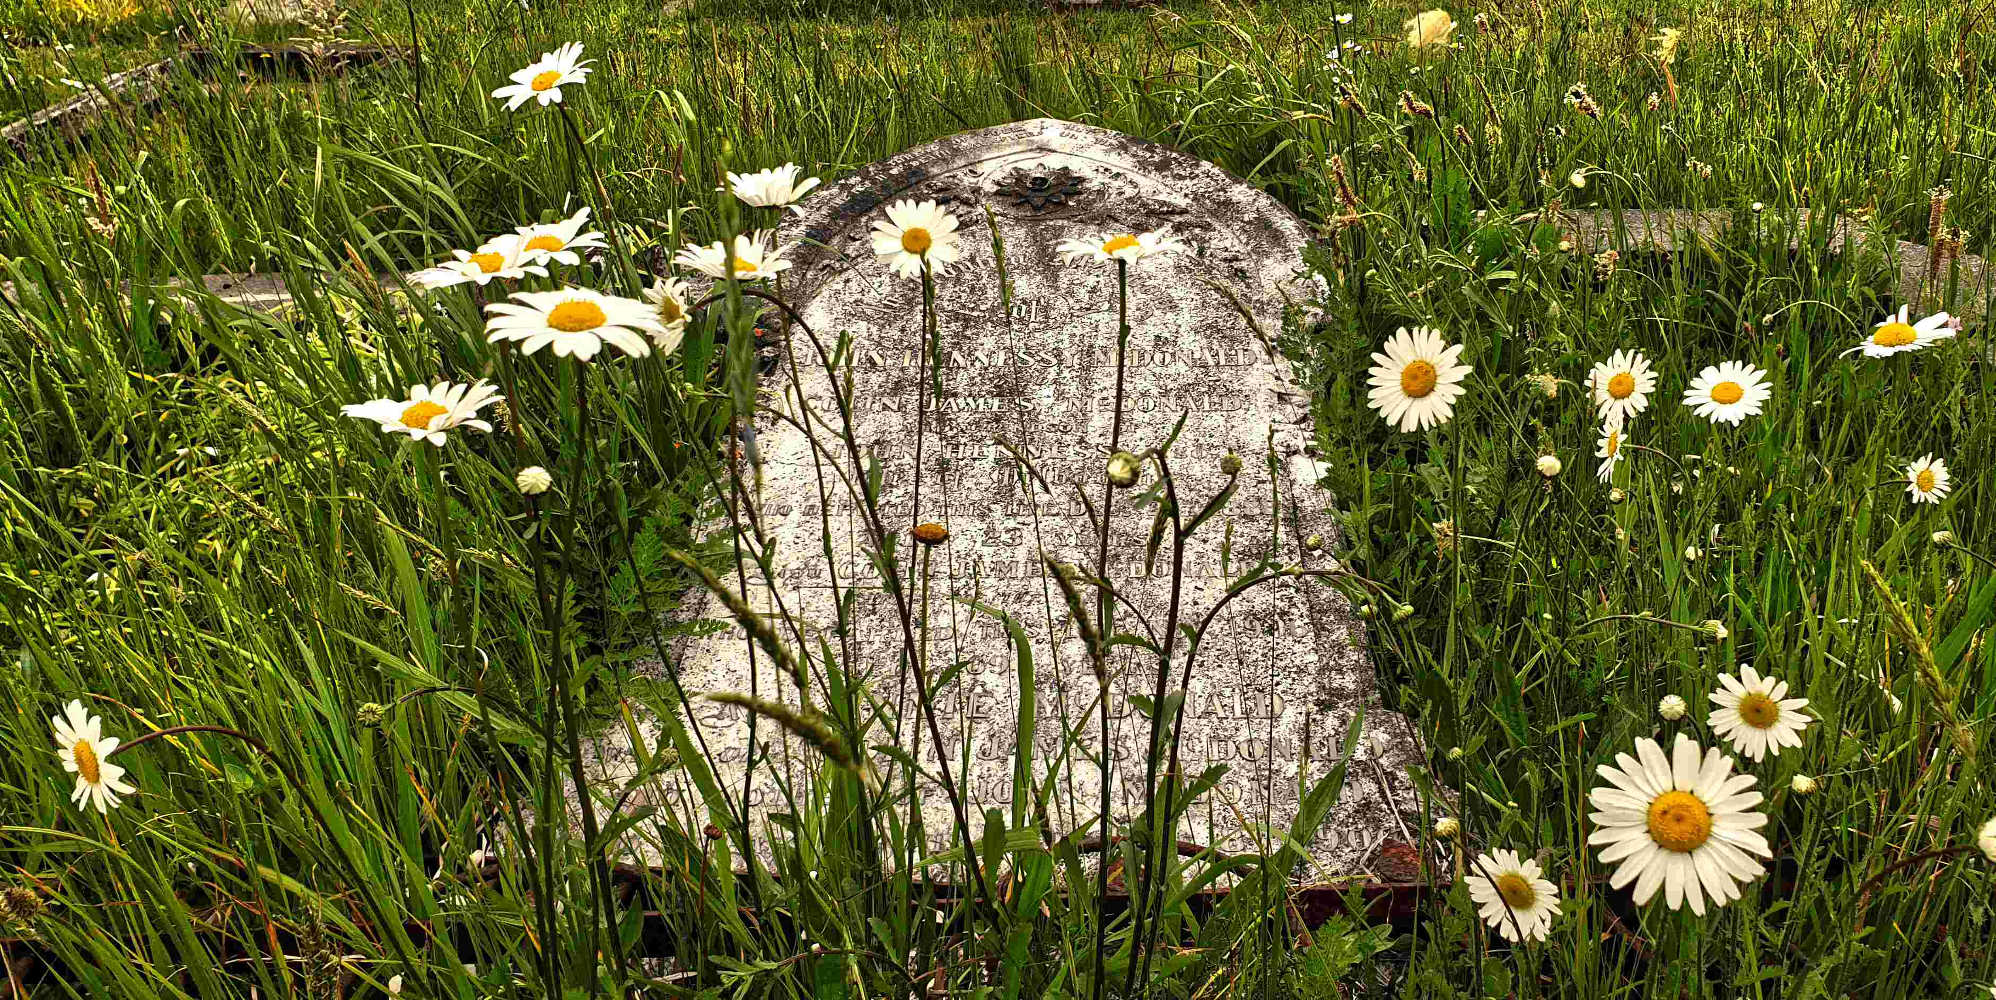 Nature and fallen tombstone, Waikumete cemetery, Auckland, New Zealand